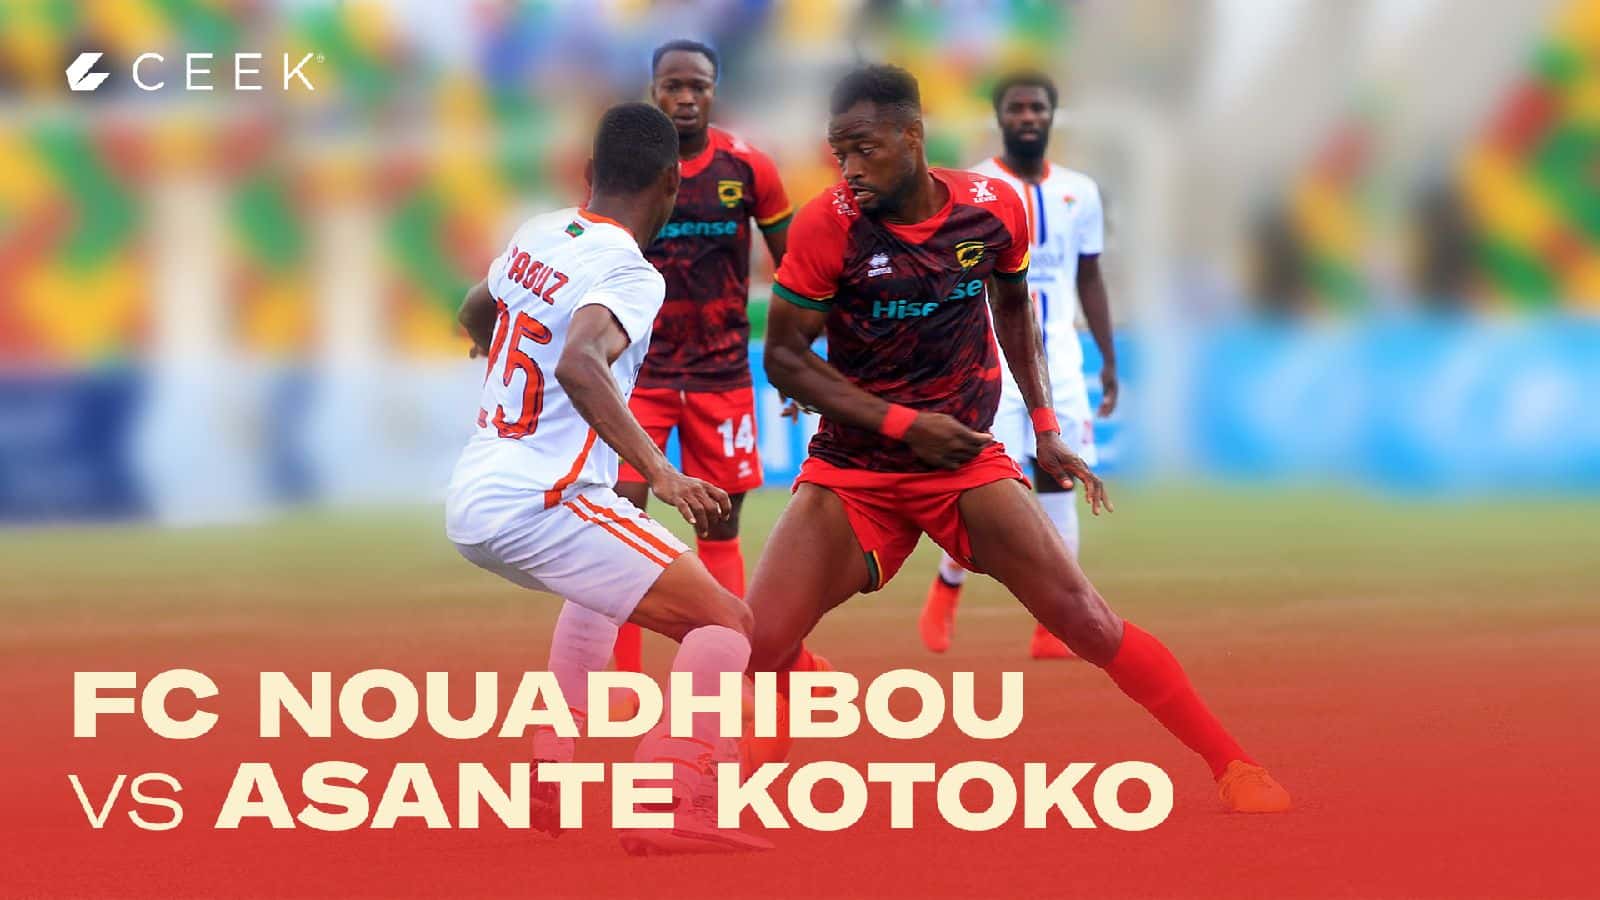 FC Nouadhibou v Asante Kotoko 29 November 2020 ceek.com